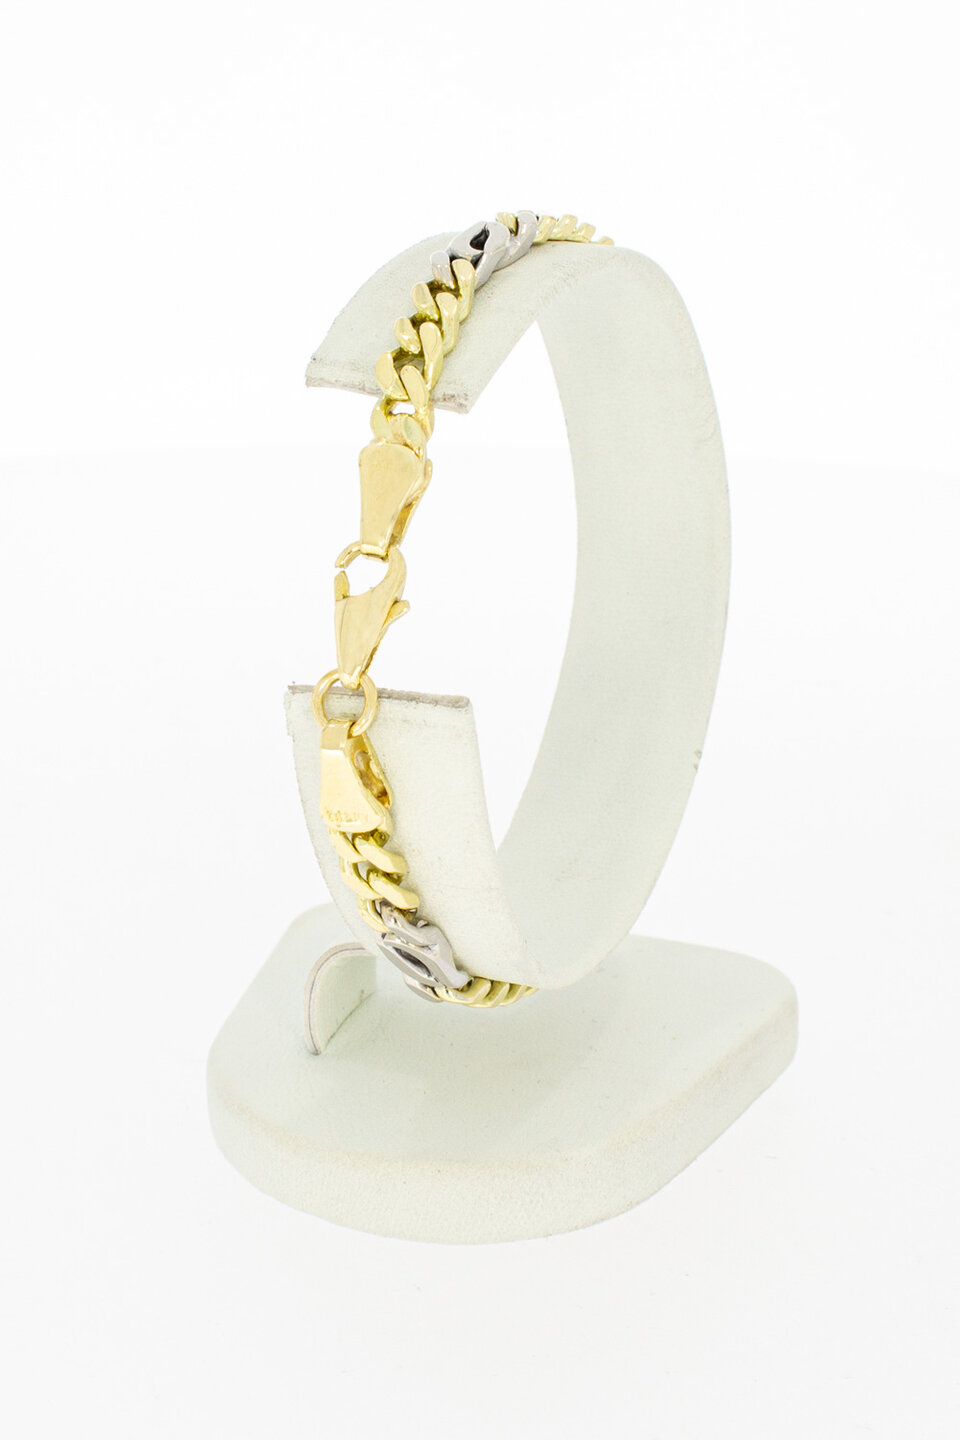 Infinity Armband 14 Karat Gold  18,5 cm